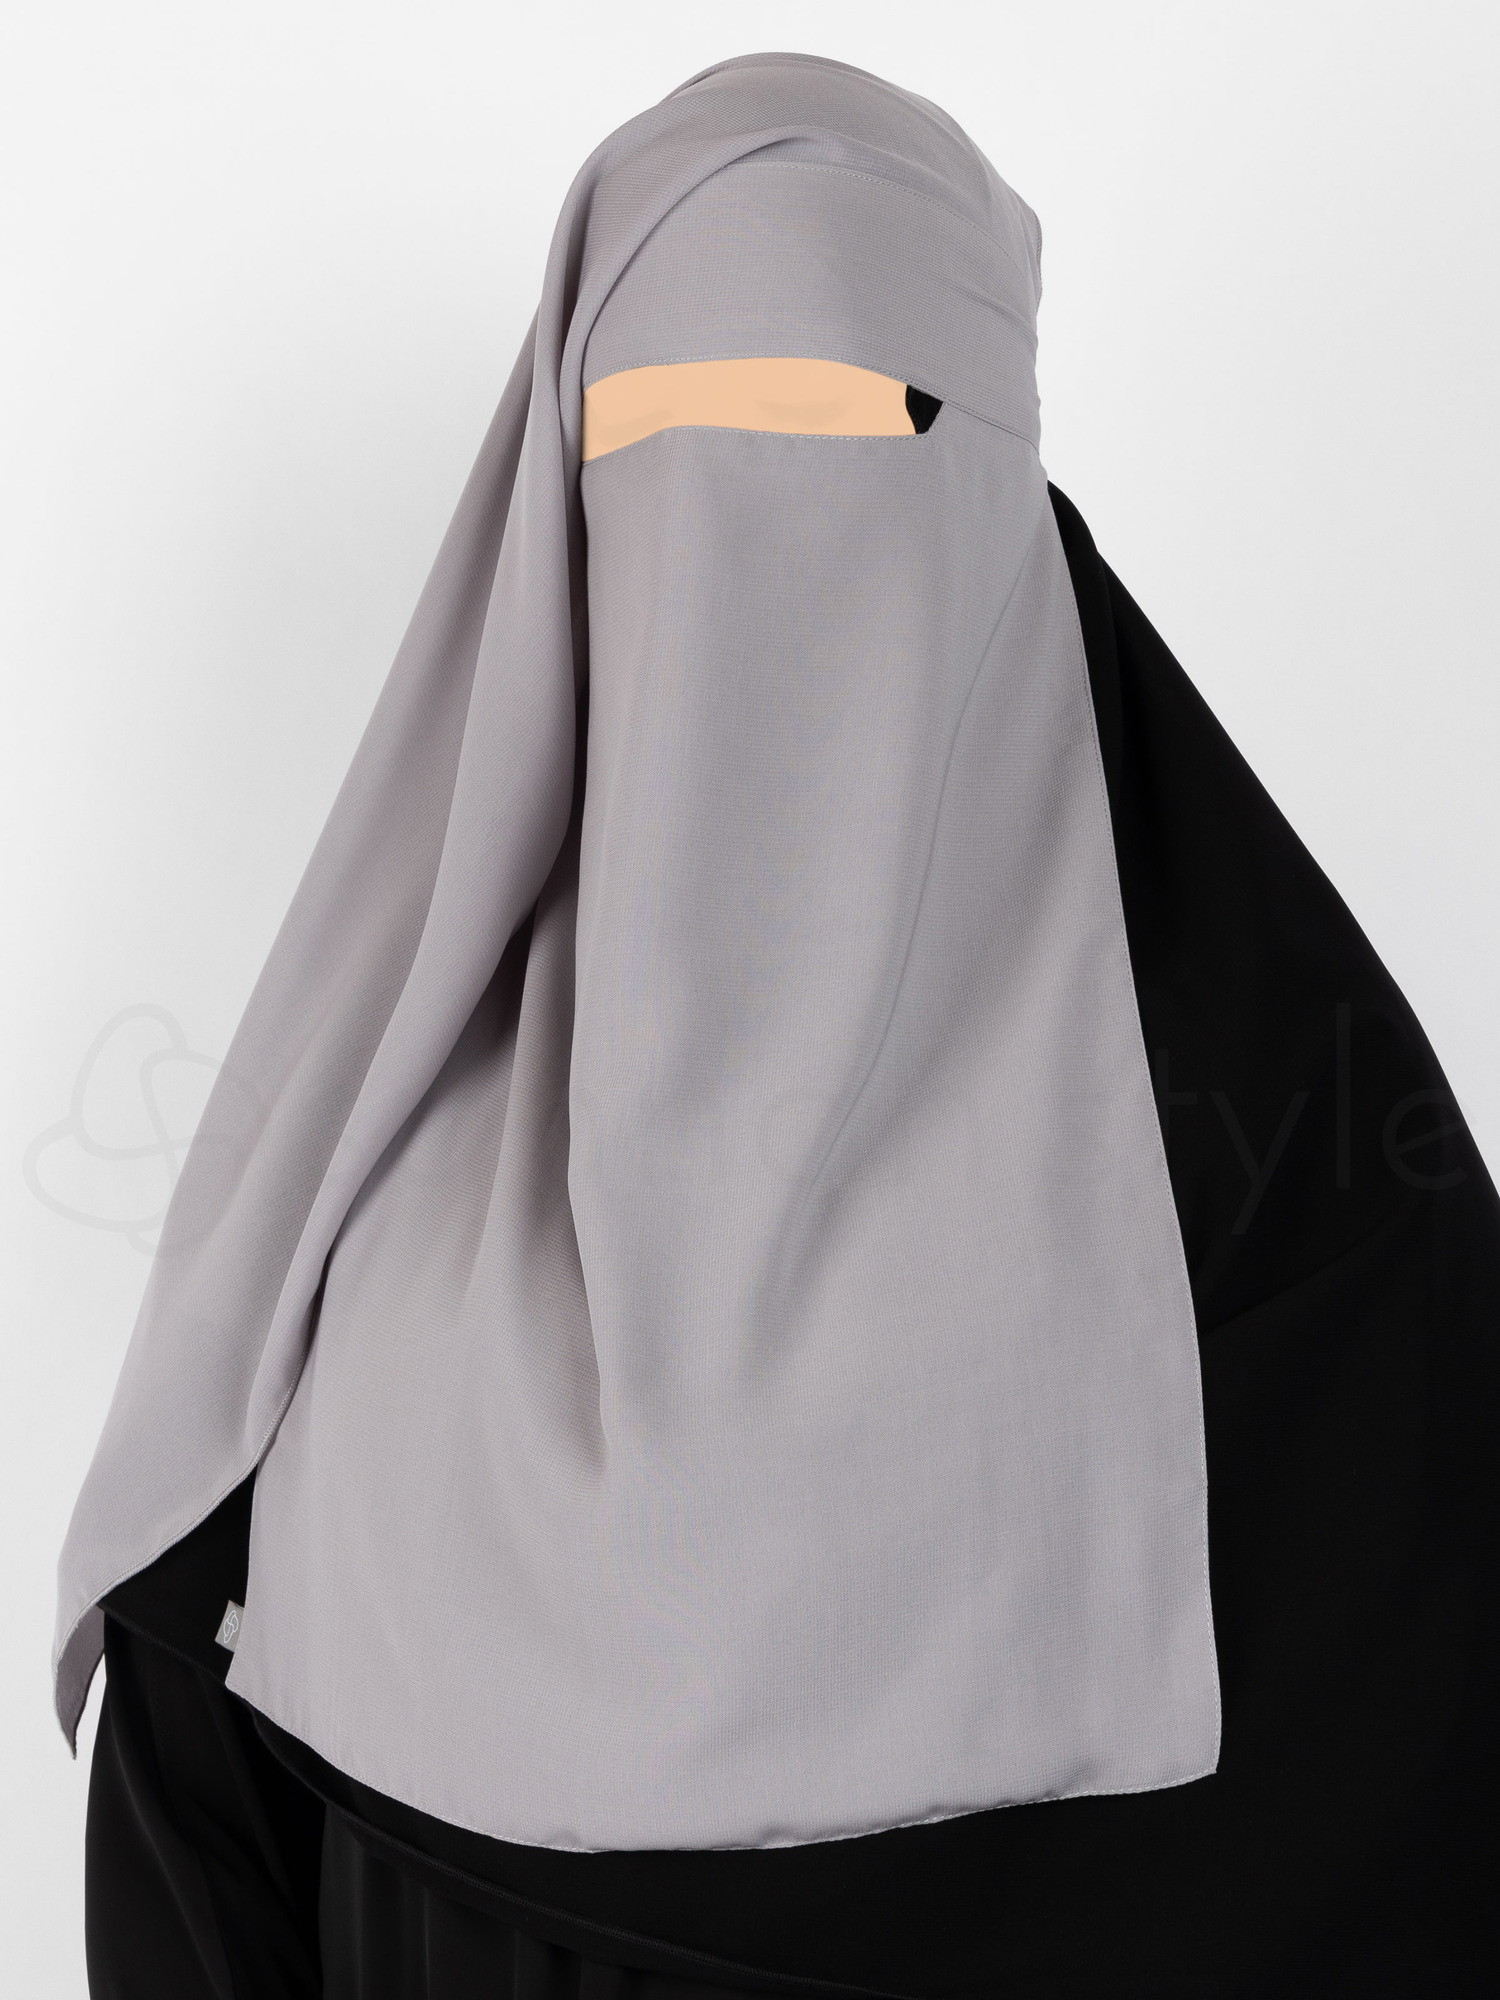 Narrow No-Pinch One Layer Niqab